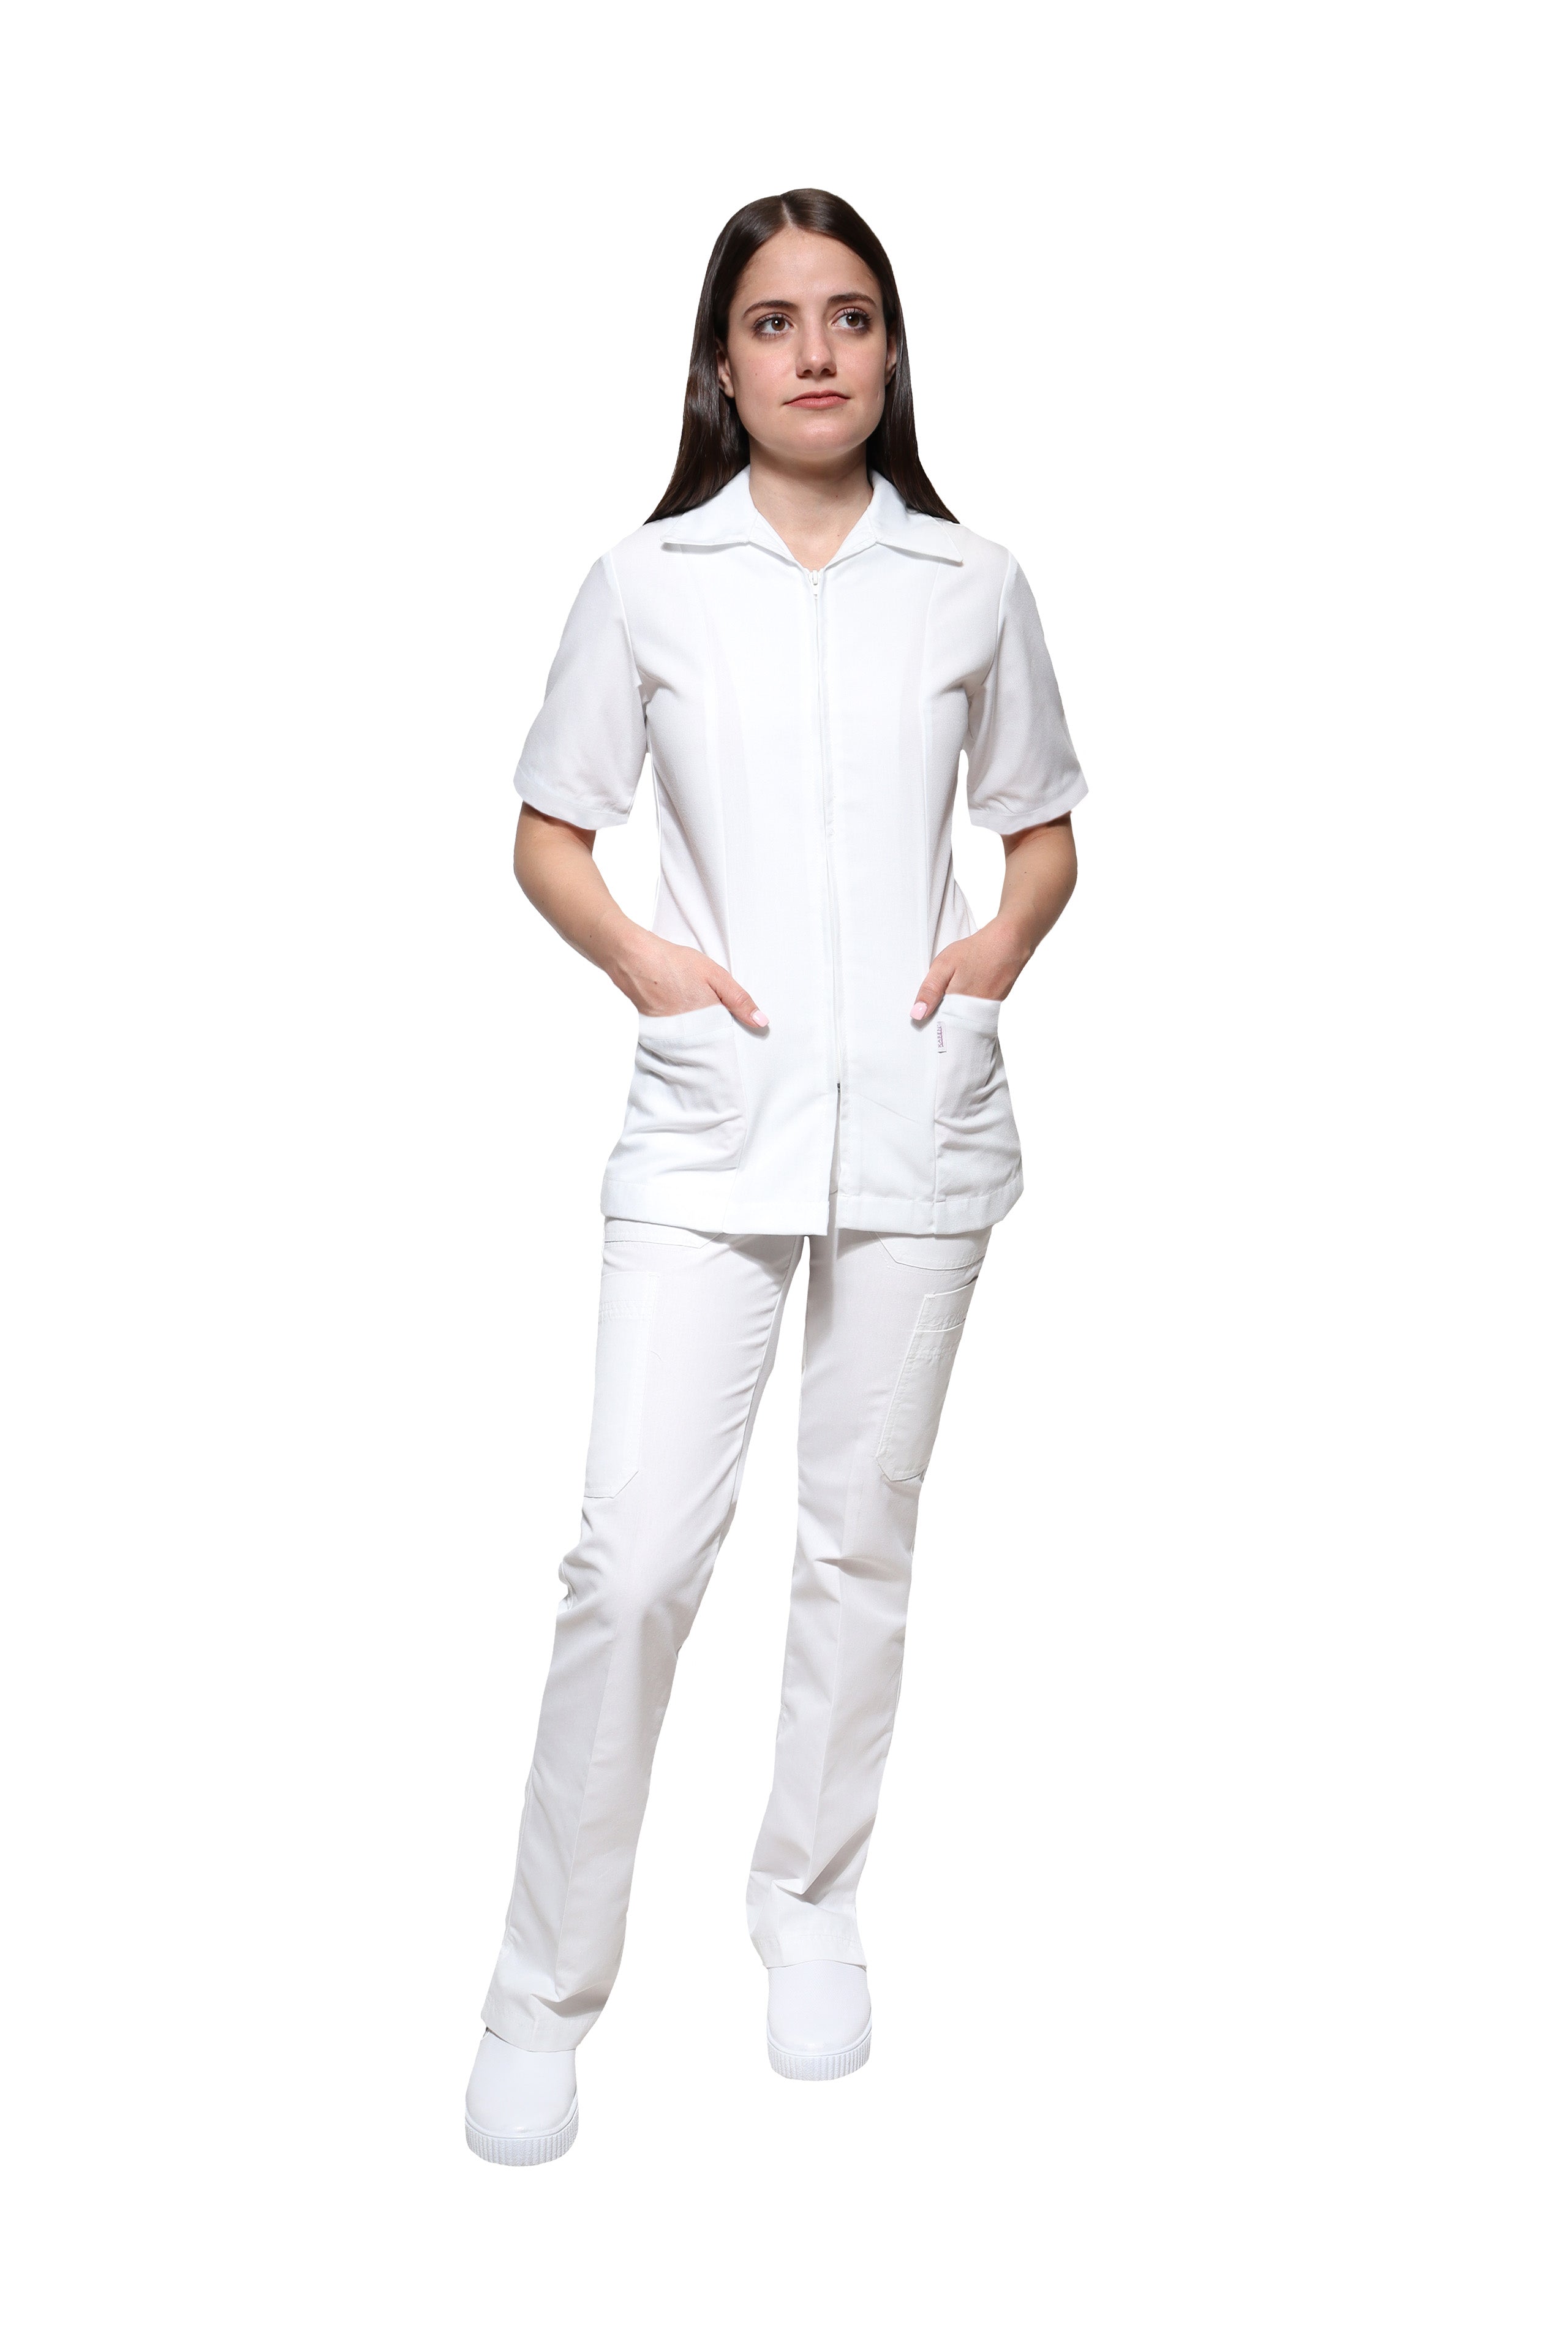 KAREN MEDICAL FASHION Pantalón Médico Blanco para Dama de Mezclilla base  ajustada, entubado - mezclilla stretch - para Estudiantes de Medicina y  Enfermería - Pantalón de Uniforme Médico para Mujer, Scrub Pants